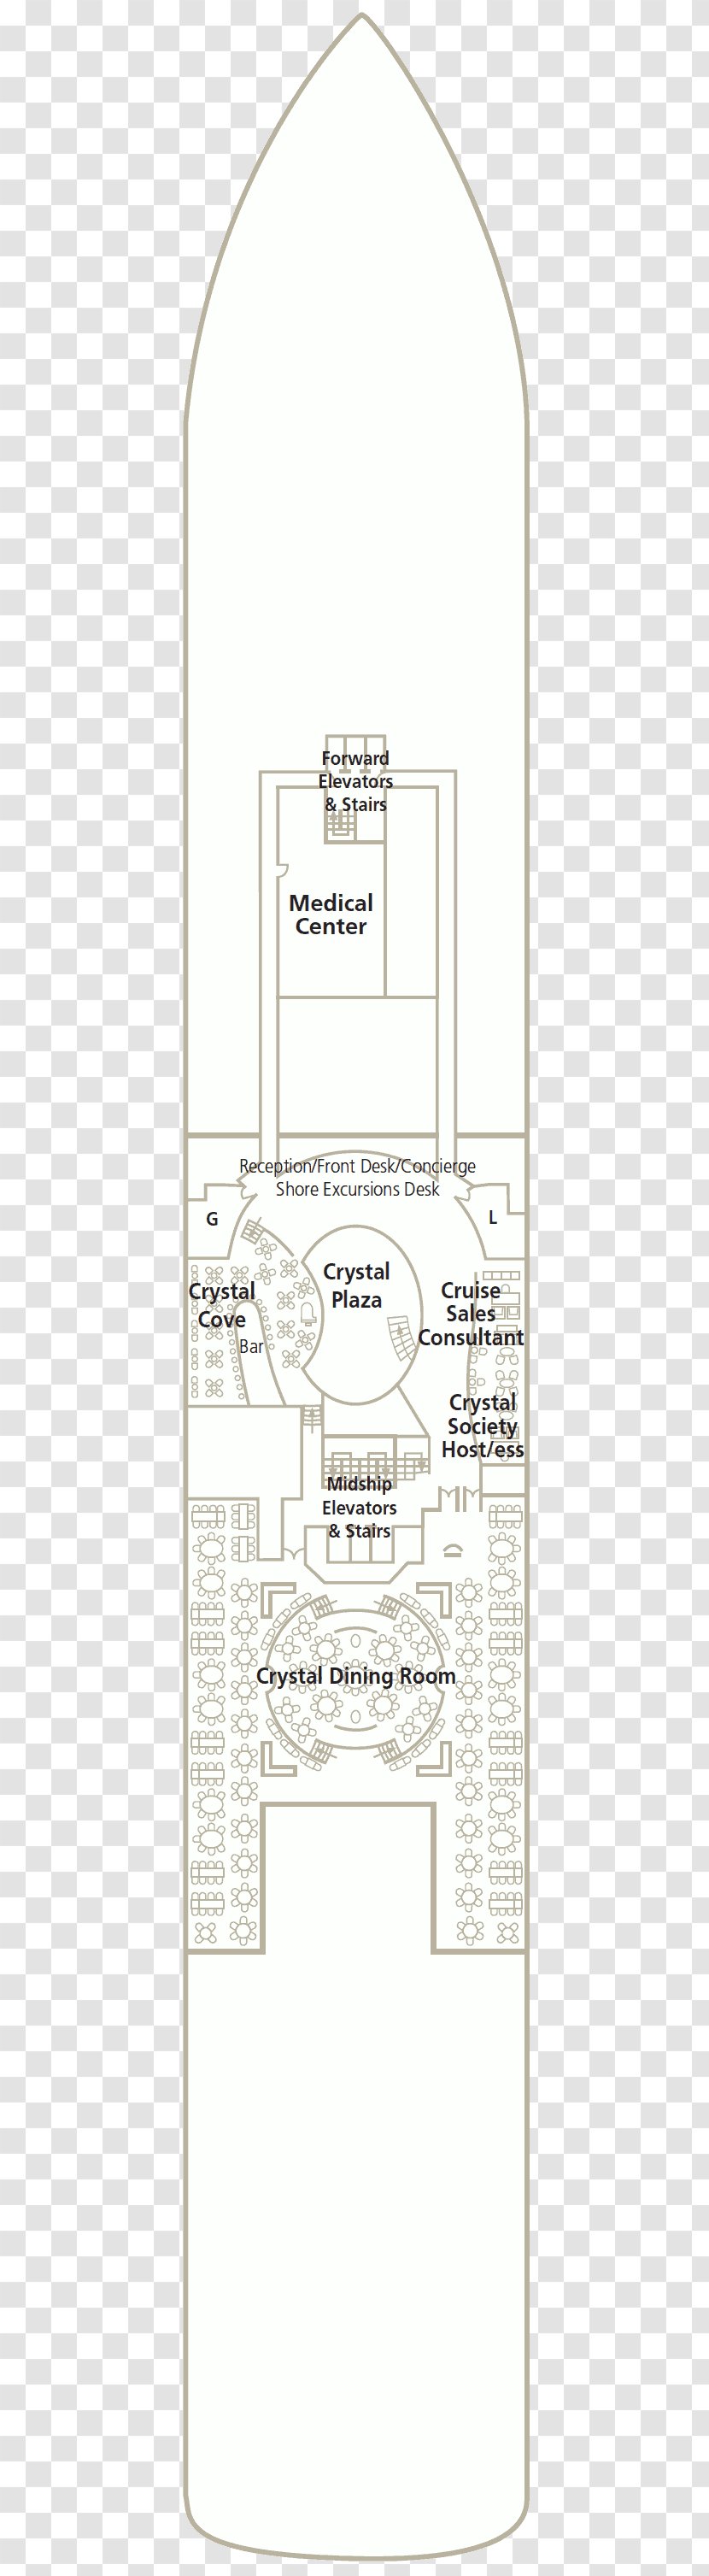 Crystal Serenity Cruise Ship Deck Floor Plan - Hospital Reception Windows Transparent PNG